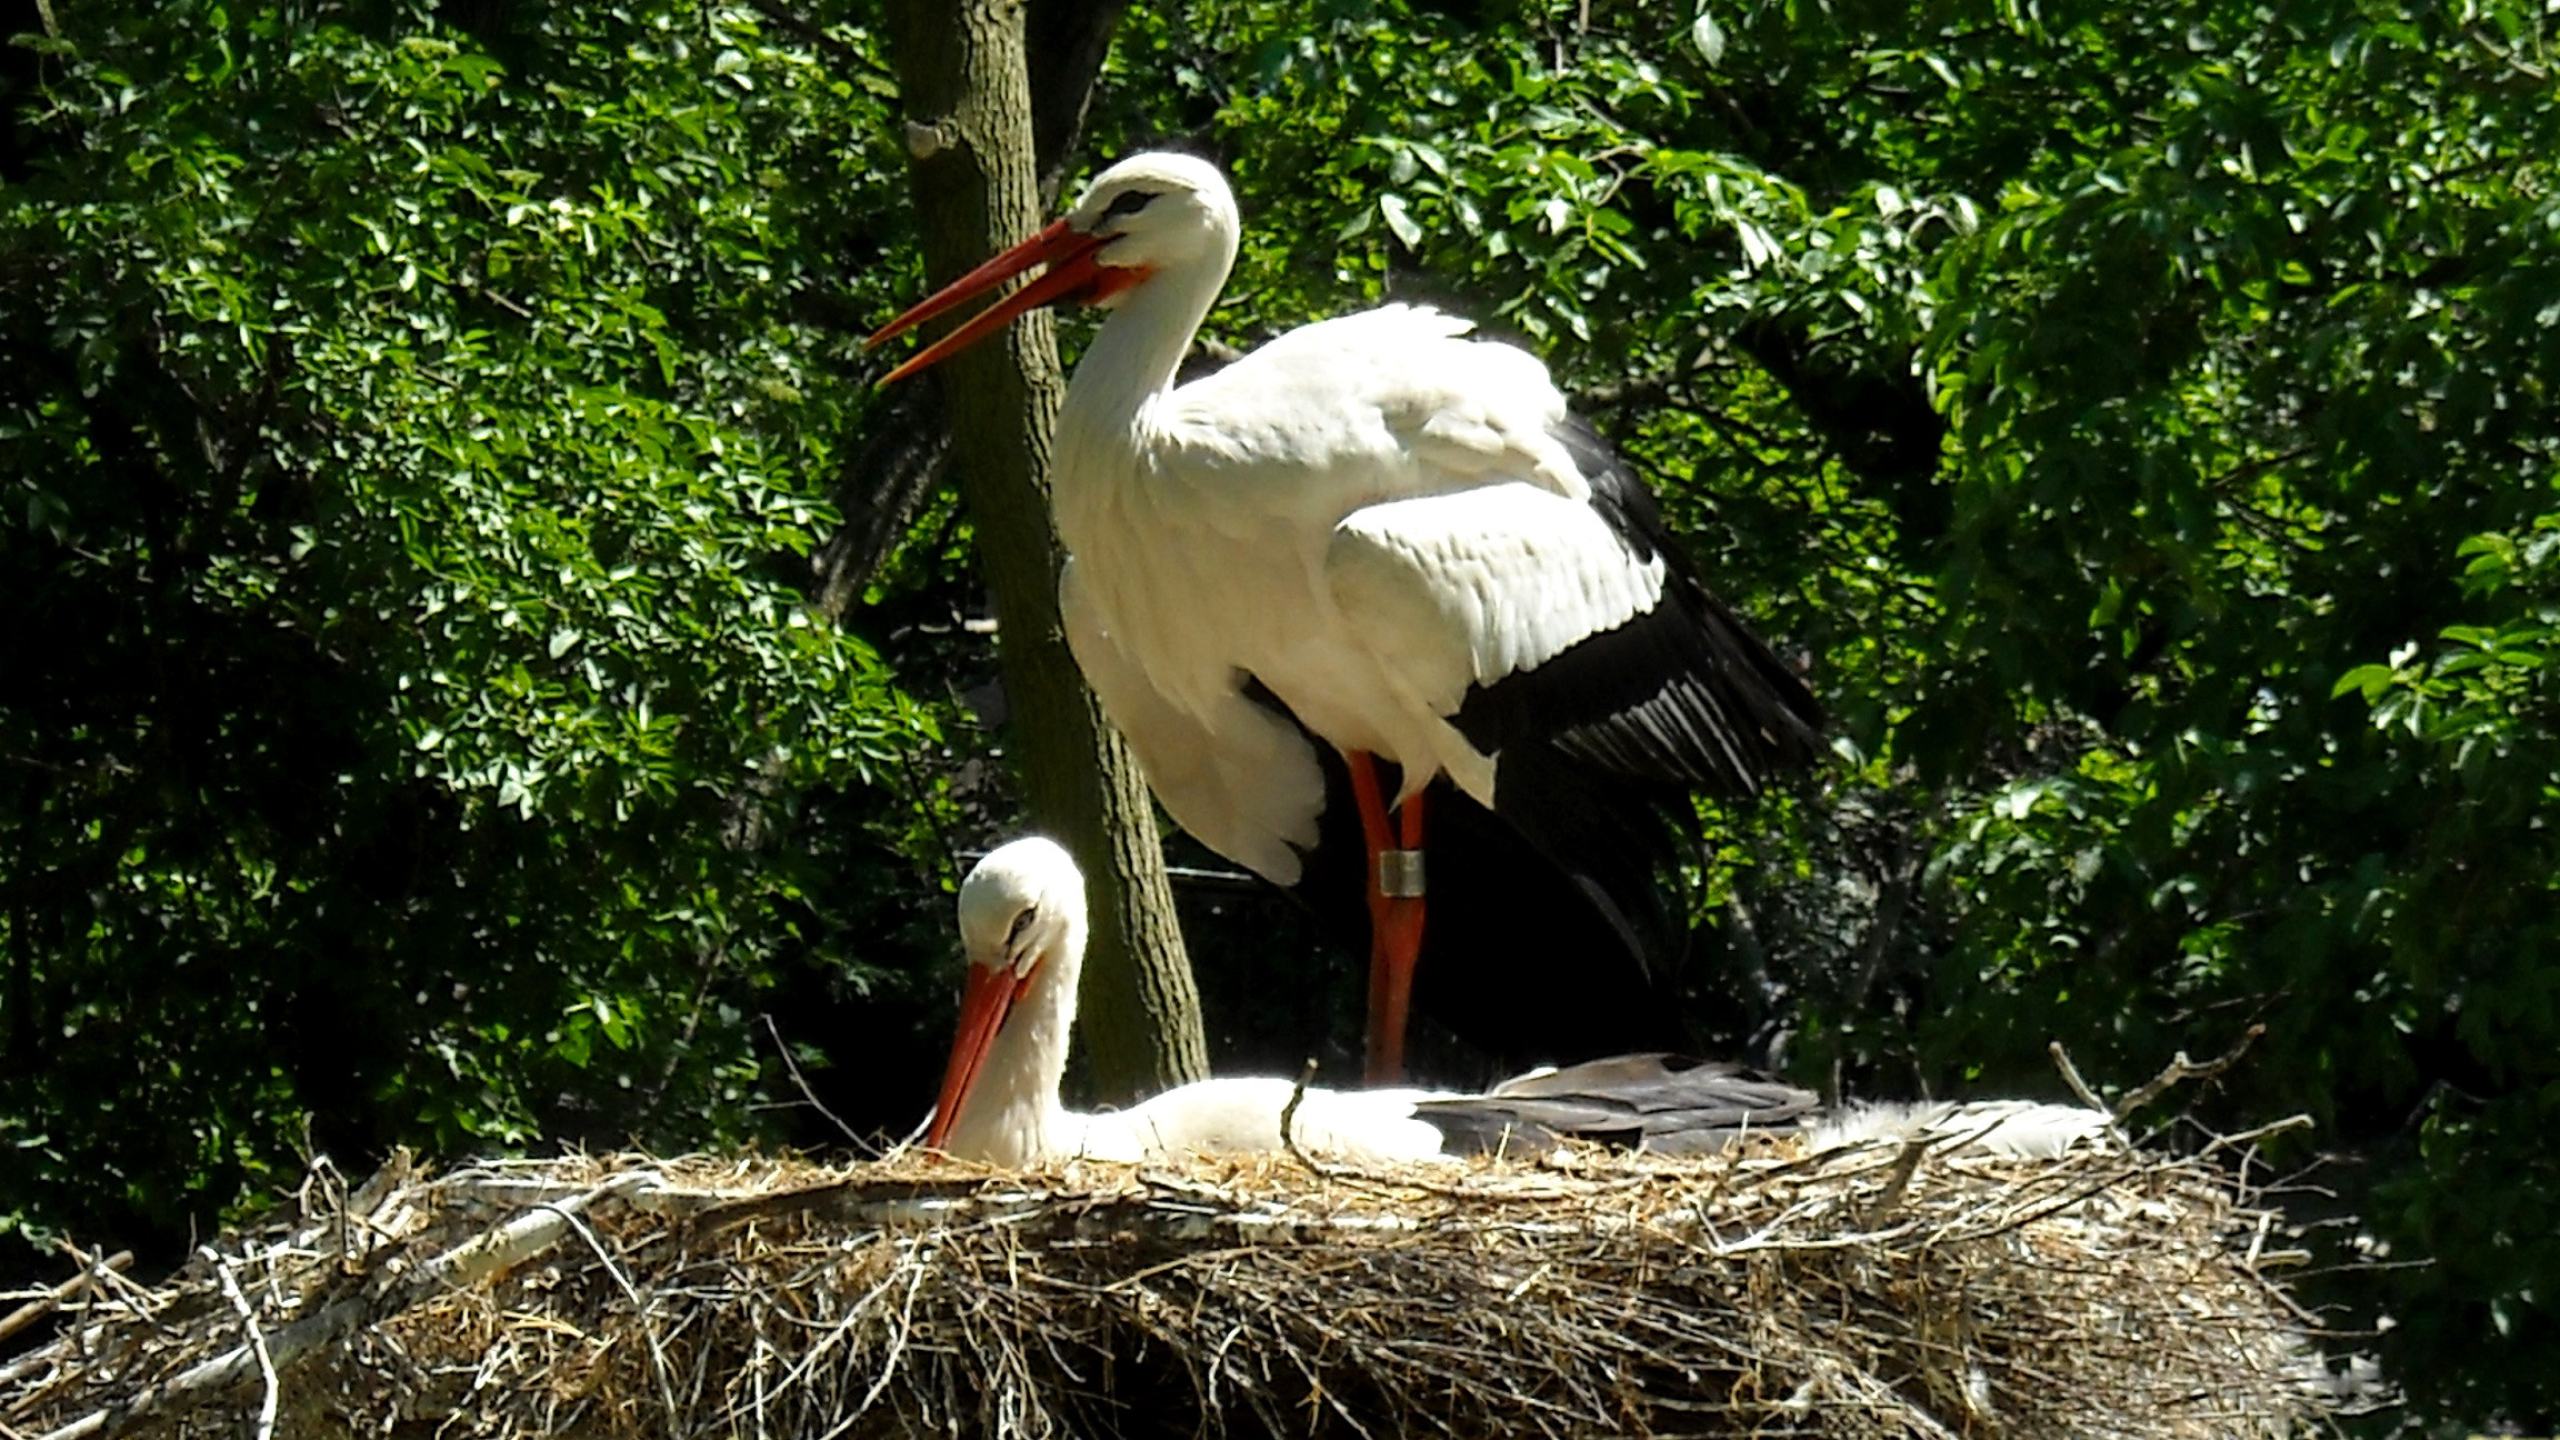 White storks, Barbara's HD wallpapers, Stunning imagery, Avian beauty, 2560x1440 HD Desktop